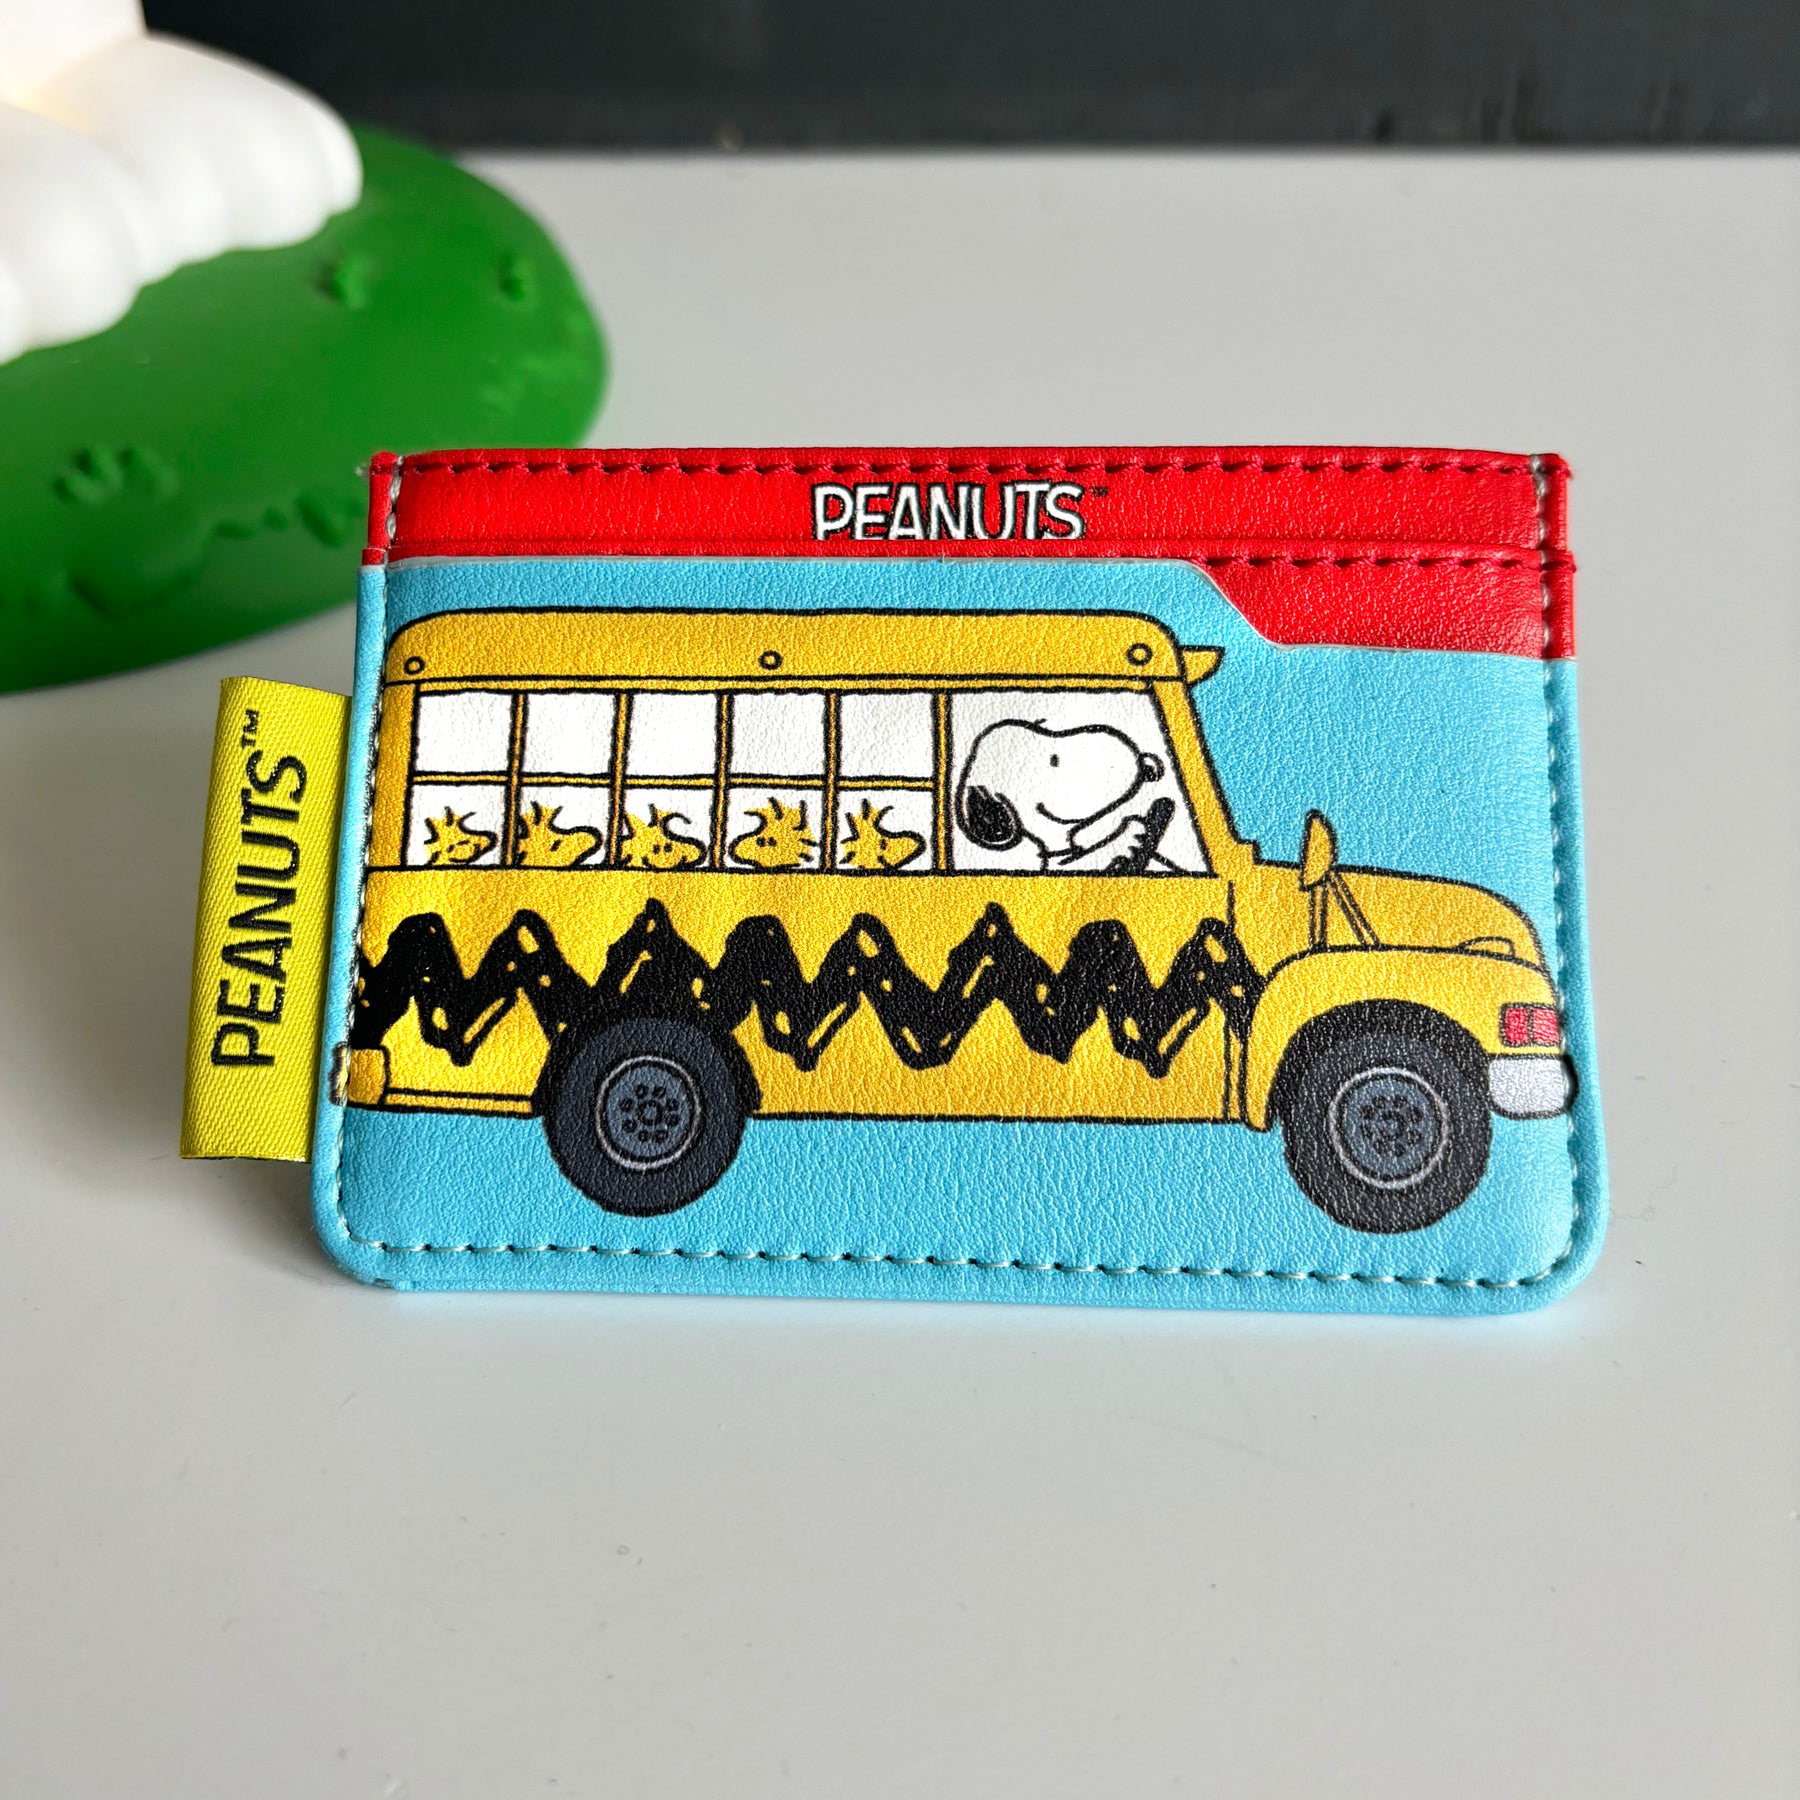 Peanuts 'Bus' Cardholder